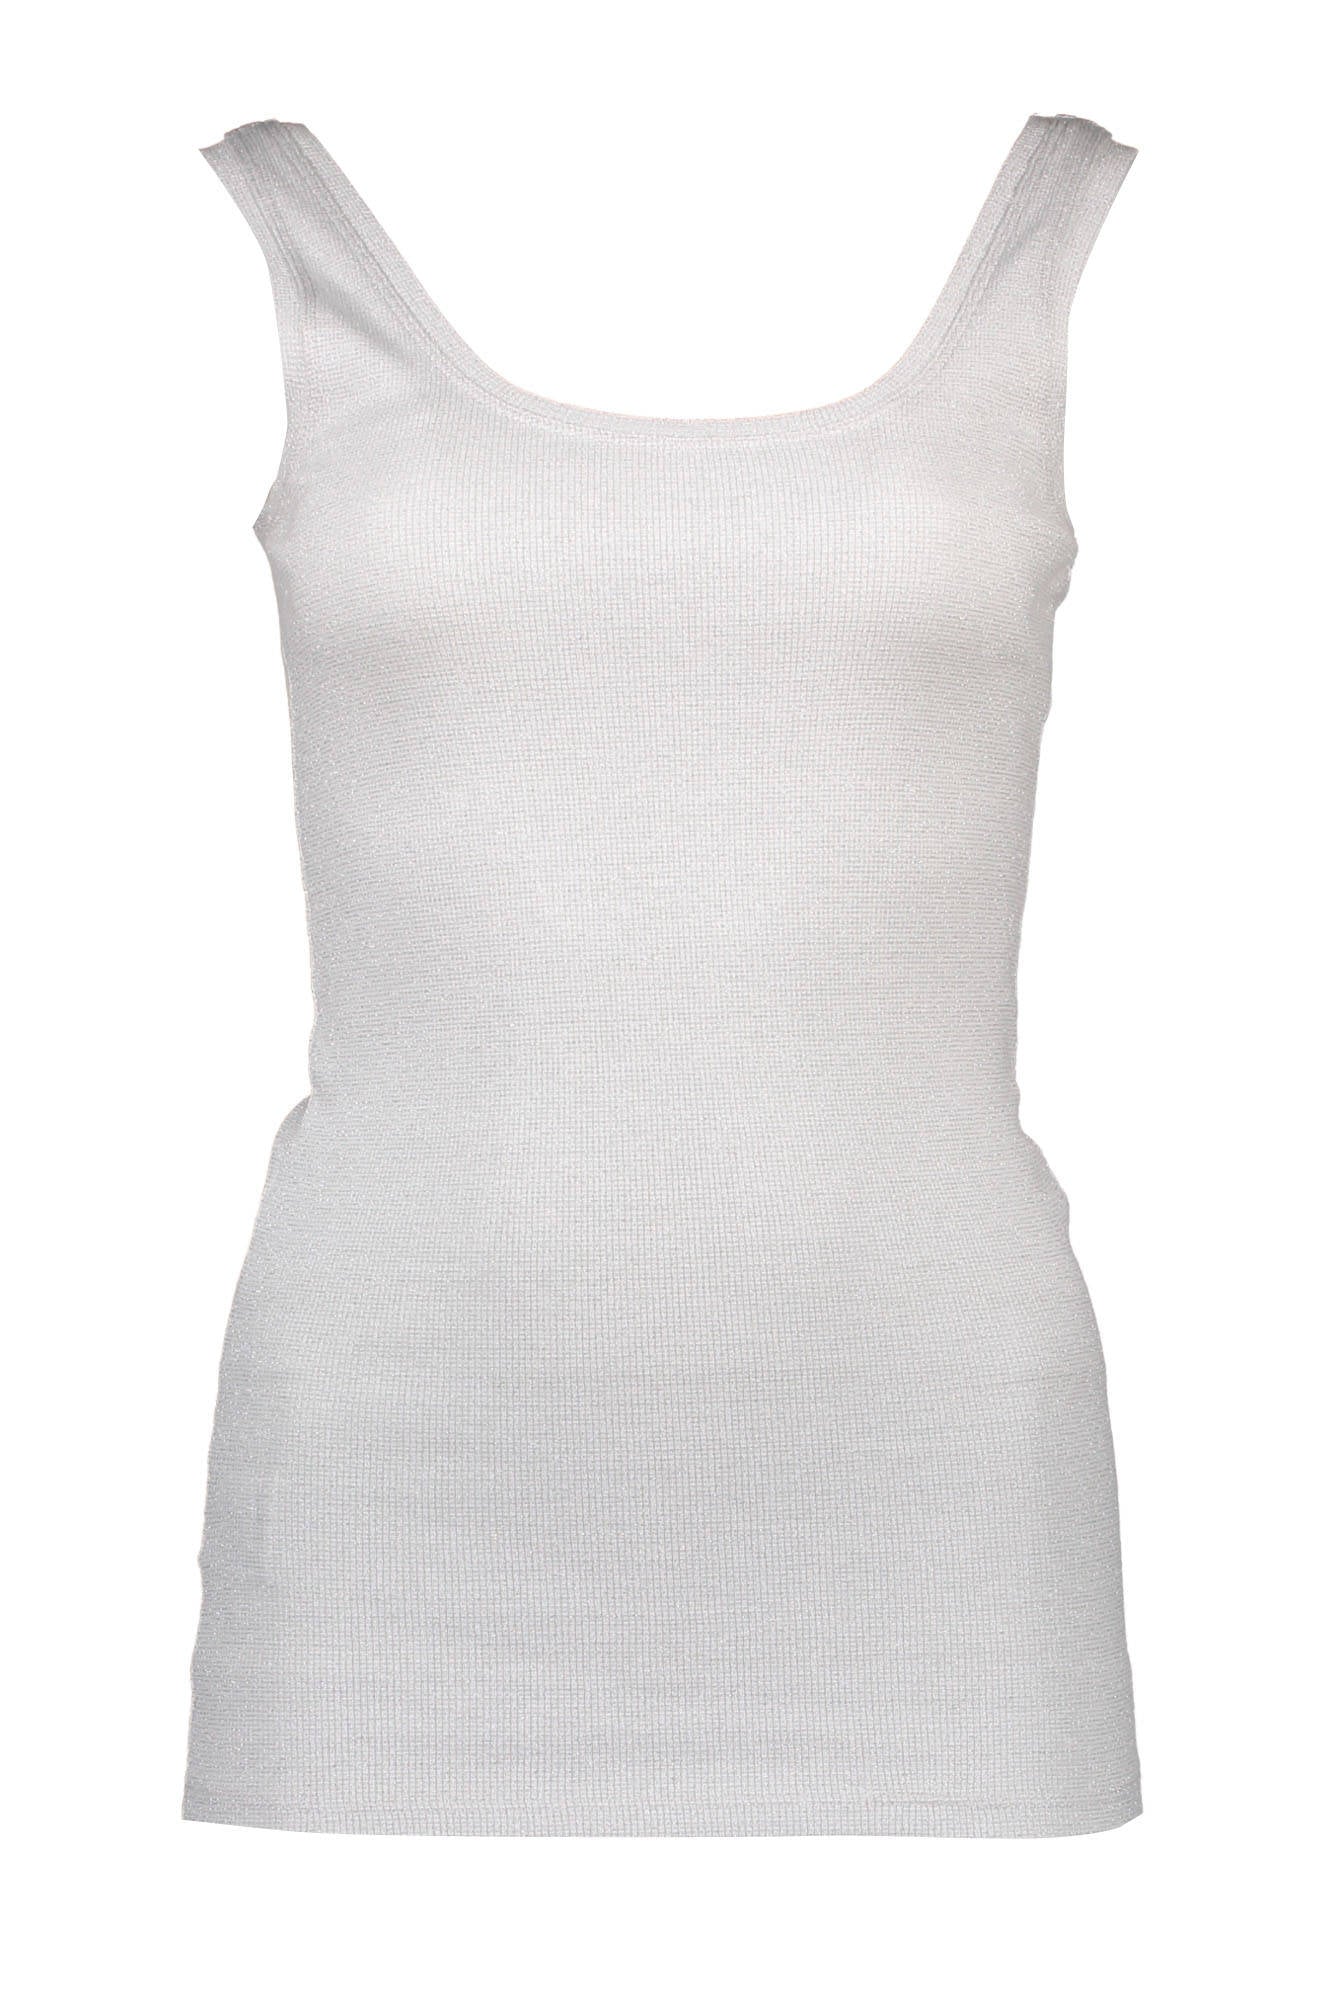 Silvian Heach White Tops & T-Shirt - Fizigo